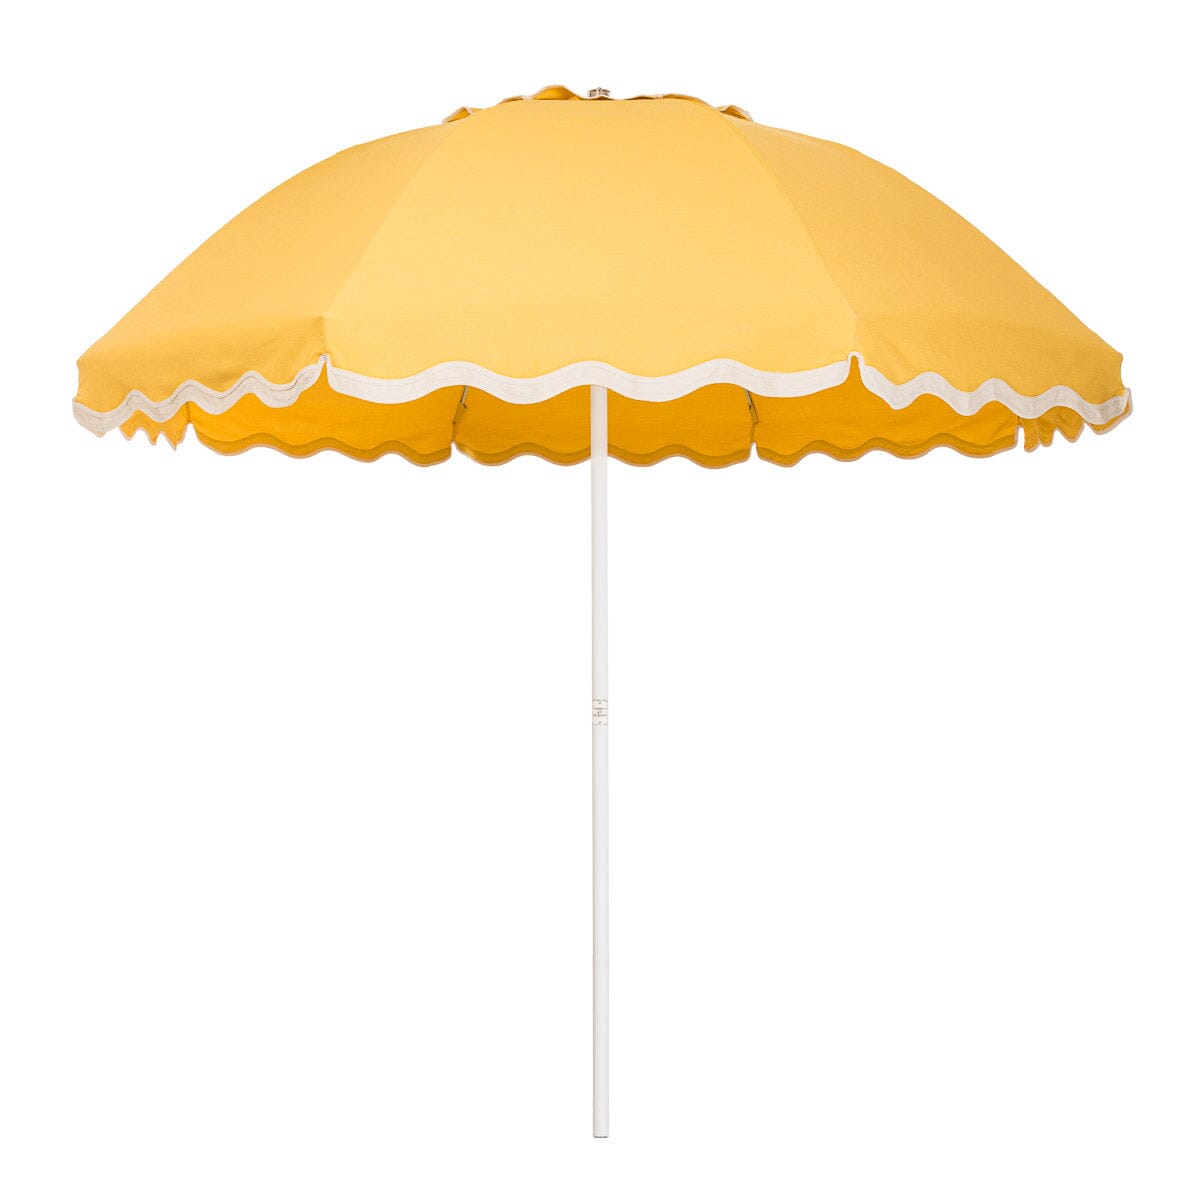 studio image of yellow patio umbrella